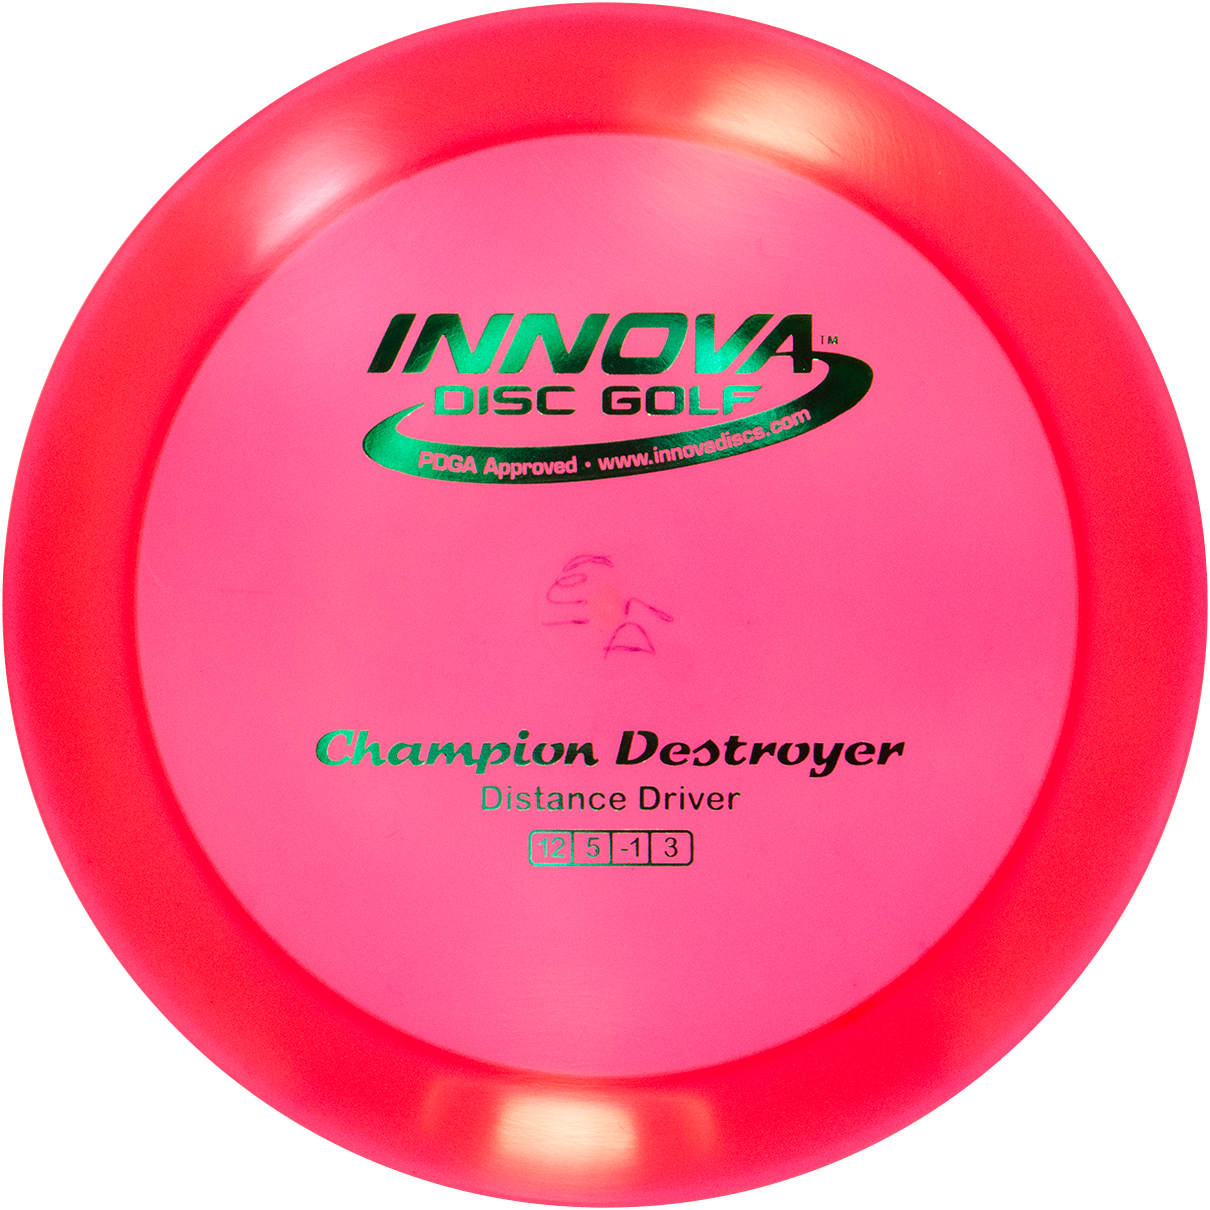 Innova's Champion Destroyer